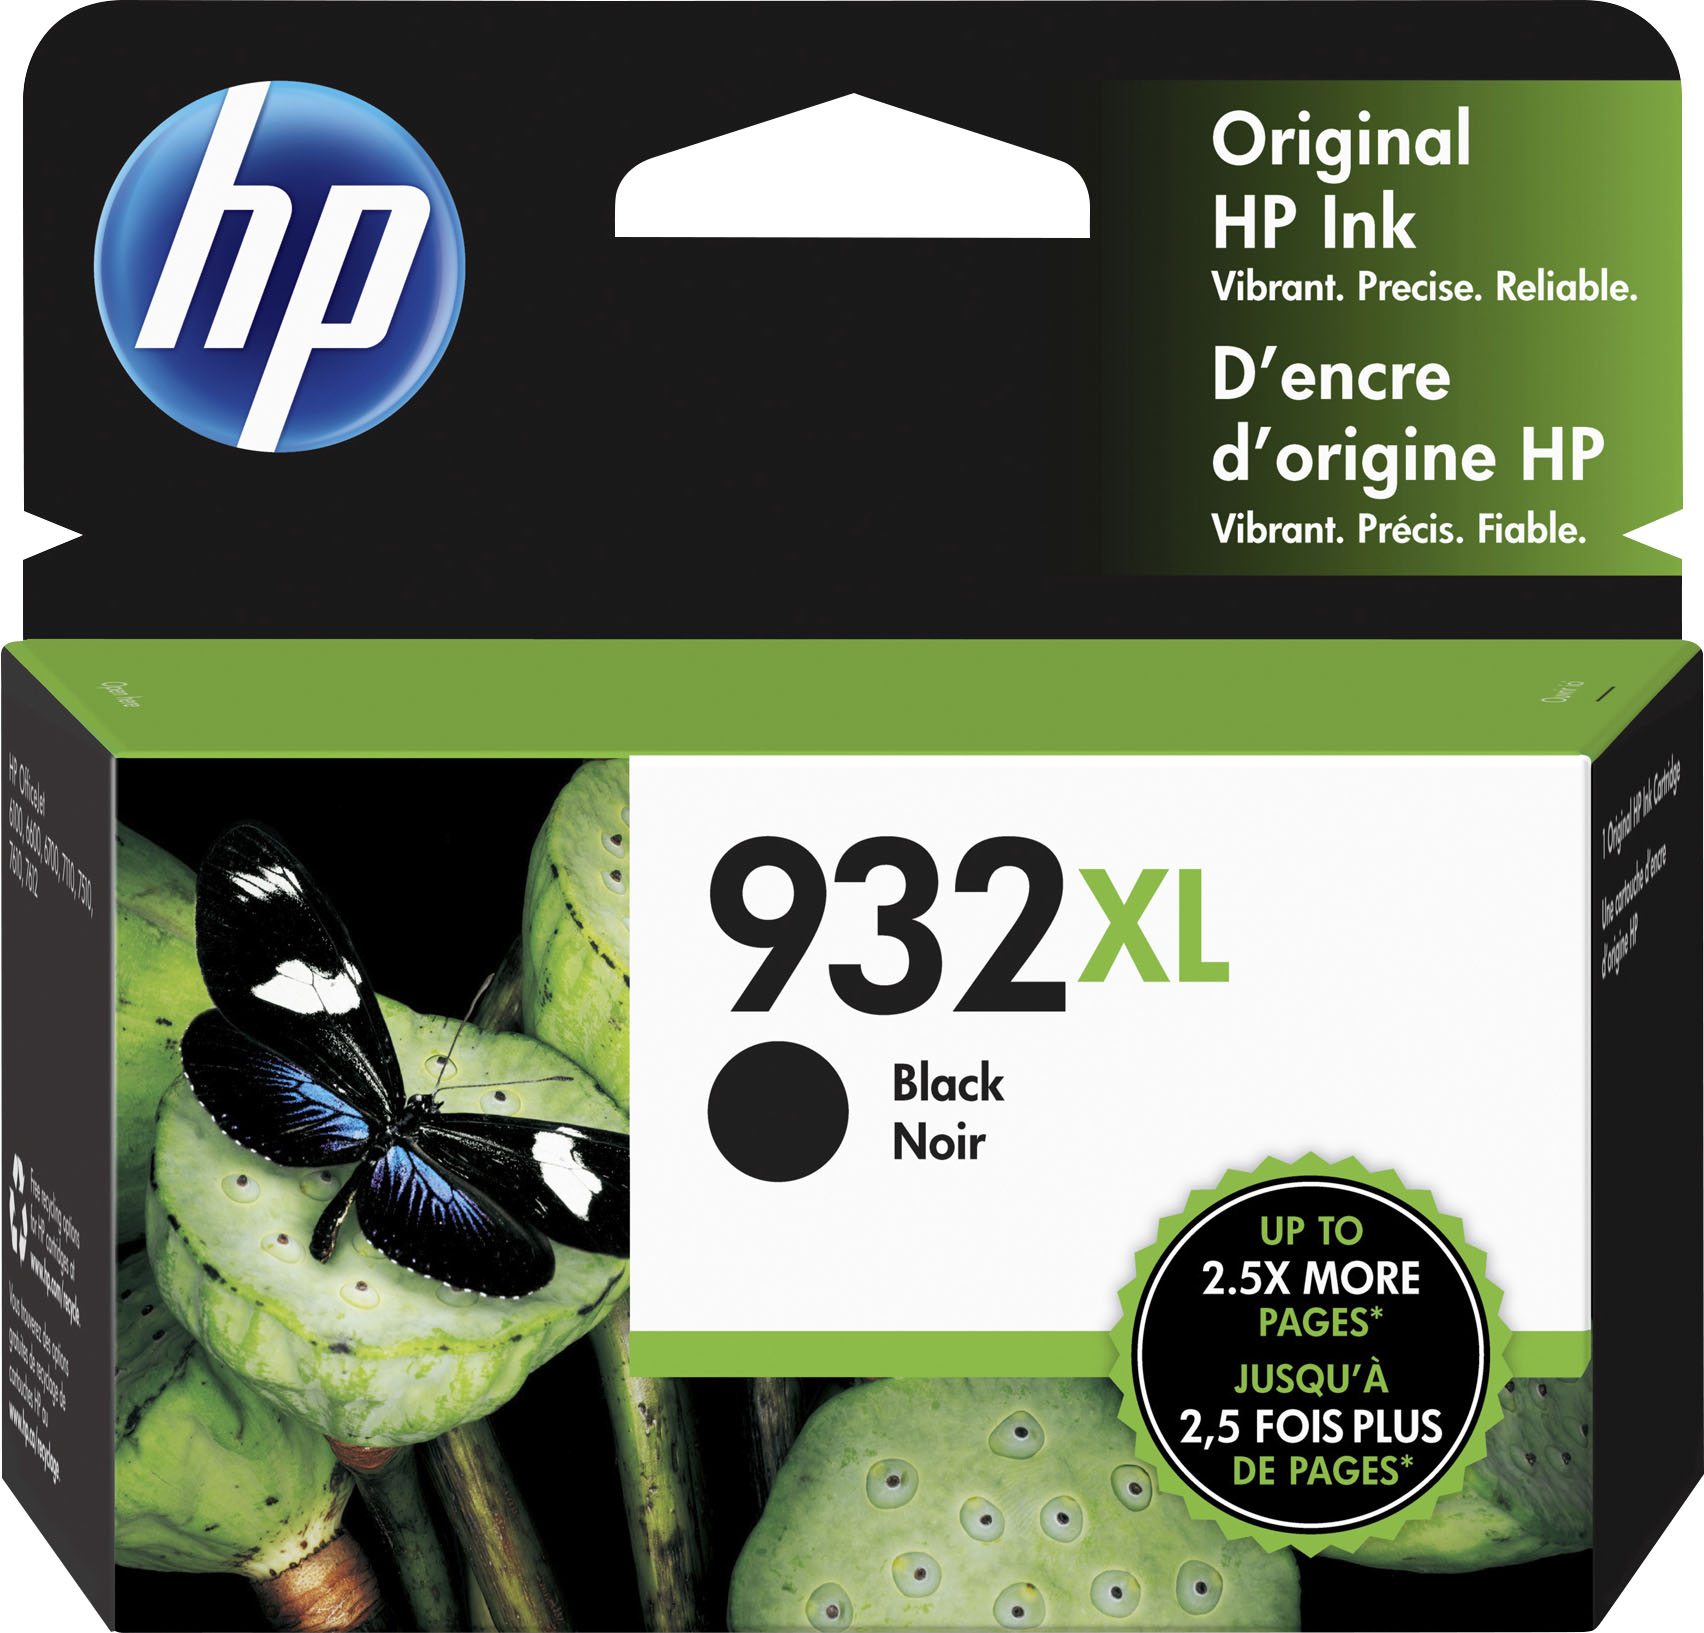 Alternative Inkjet HP 903XL Black – The Inky Shop